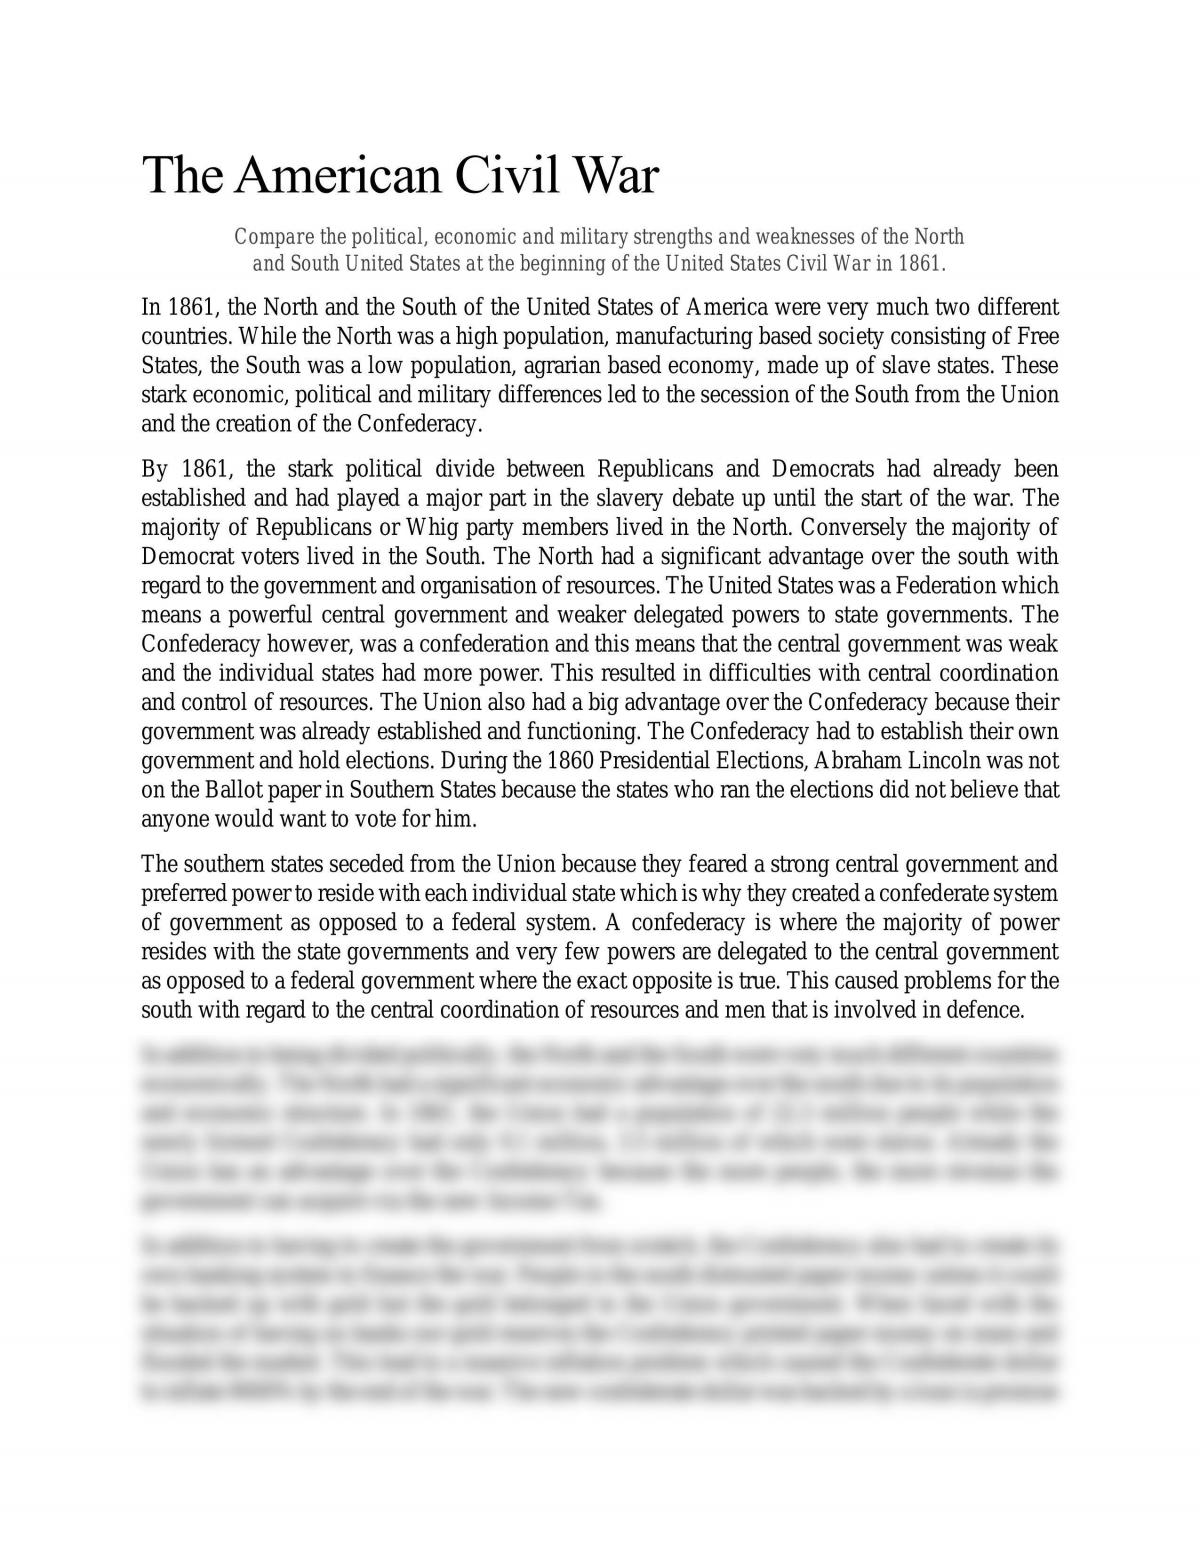 causes of american civil war essay